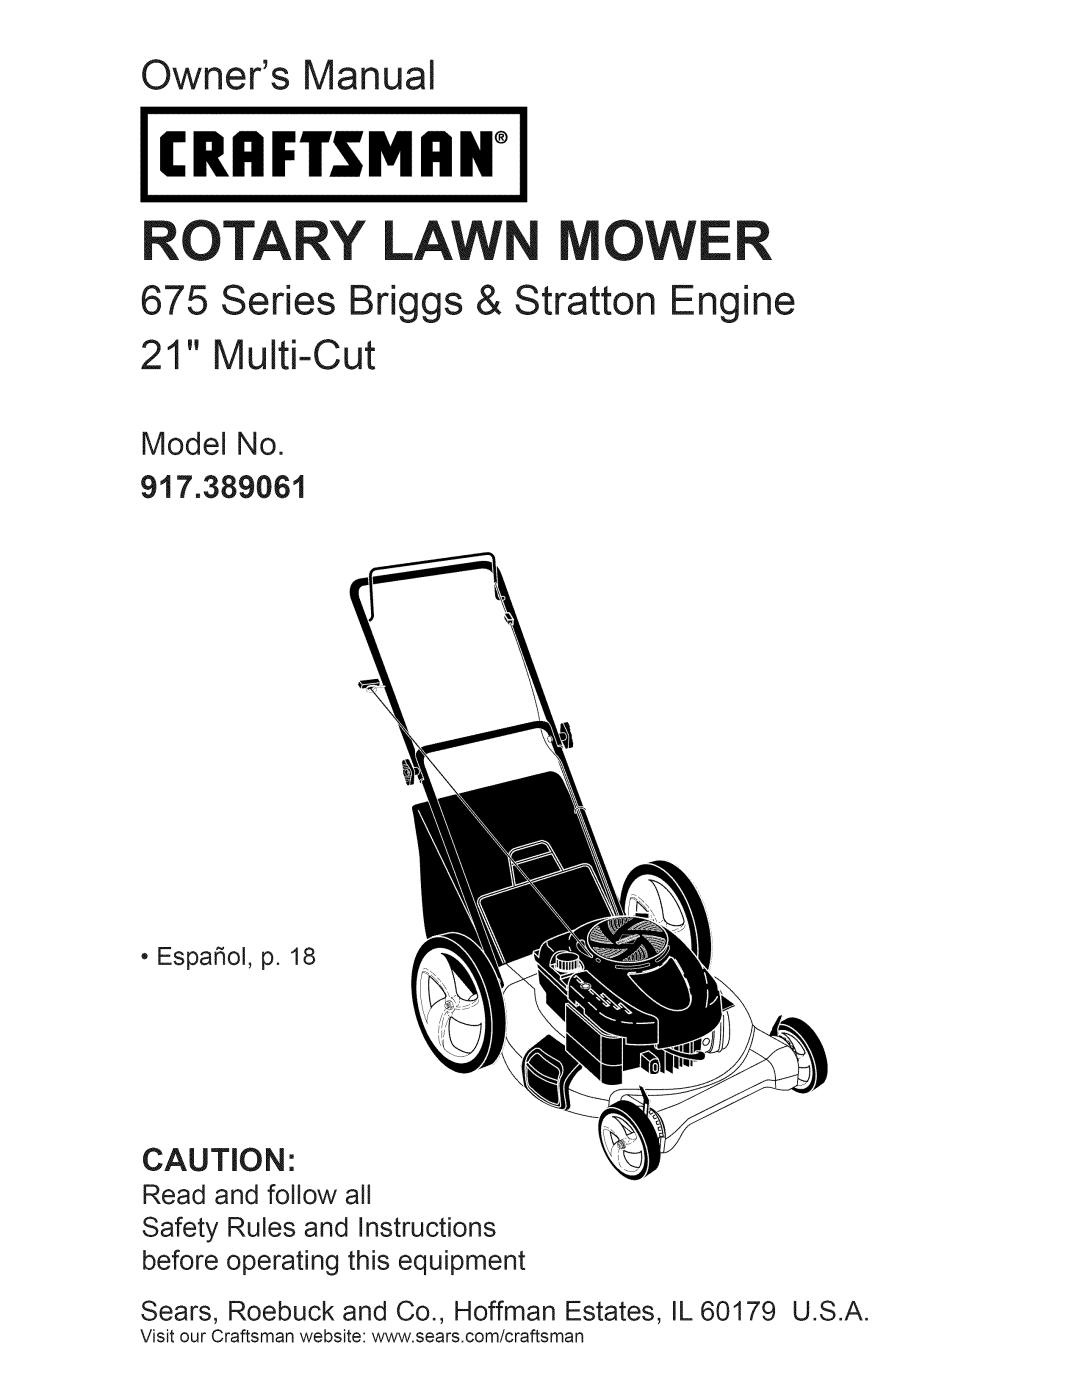 Craftsman owner manual Model No 917.389061, Craftsman, Rotary Lawn Mower, Owners Manual 